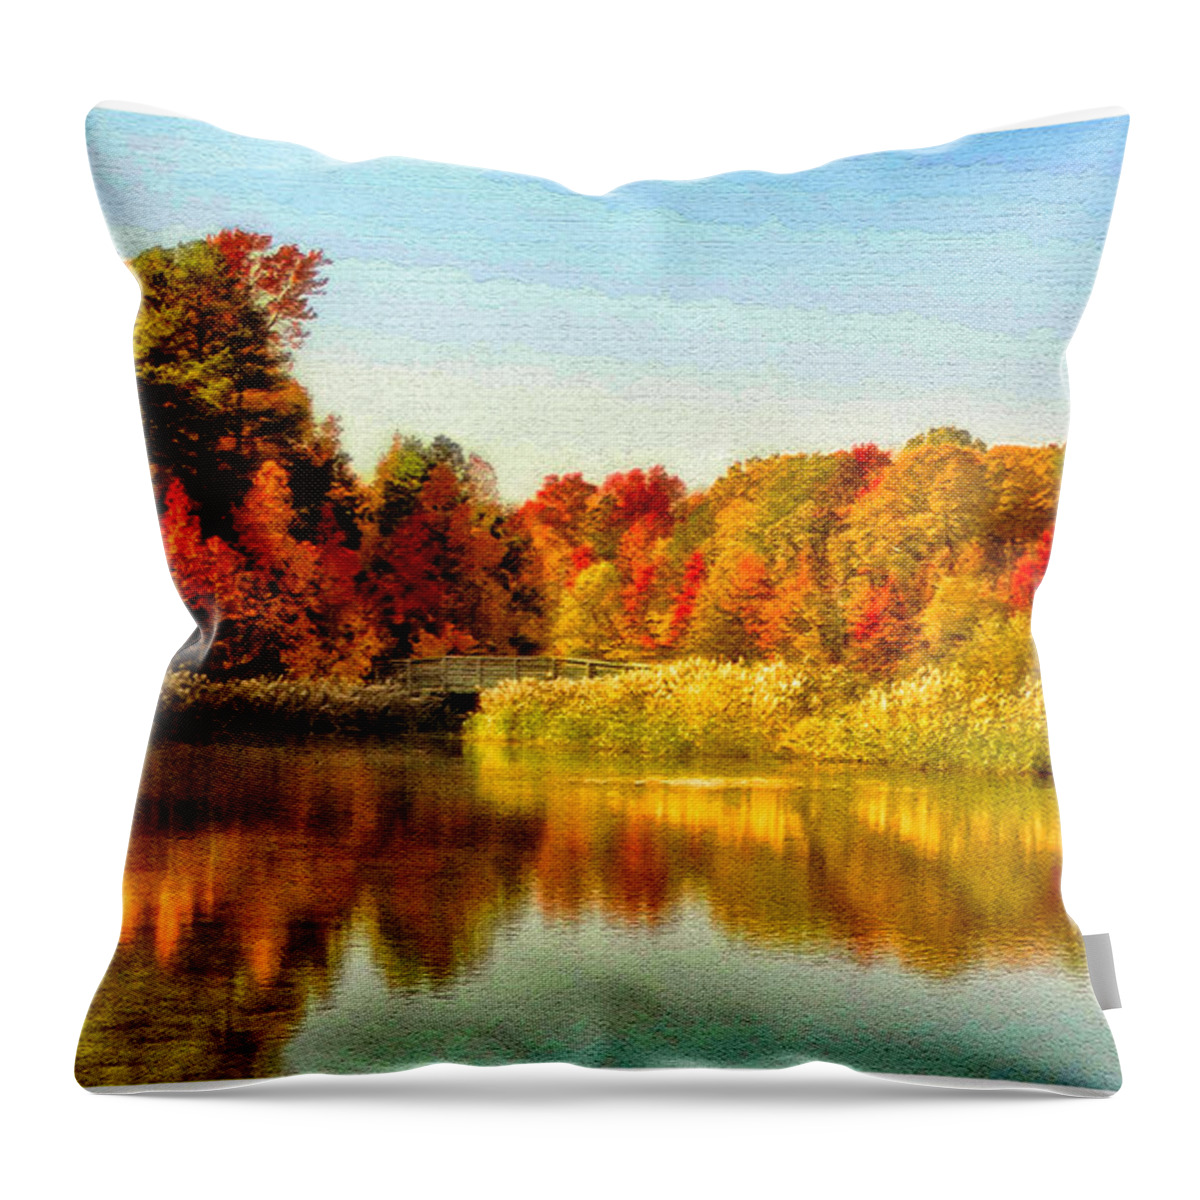 Autumnal Throw Pillow featuring the photograph Autumn Ablaze by Ola Allen